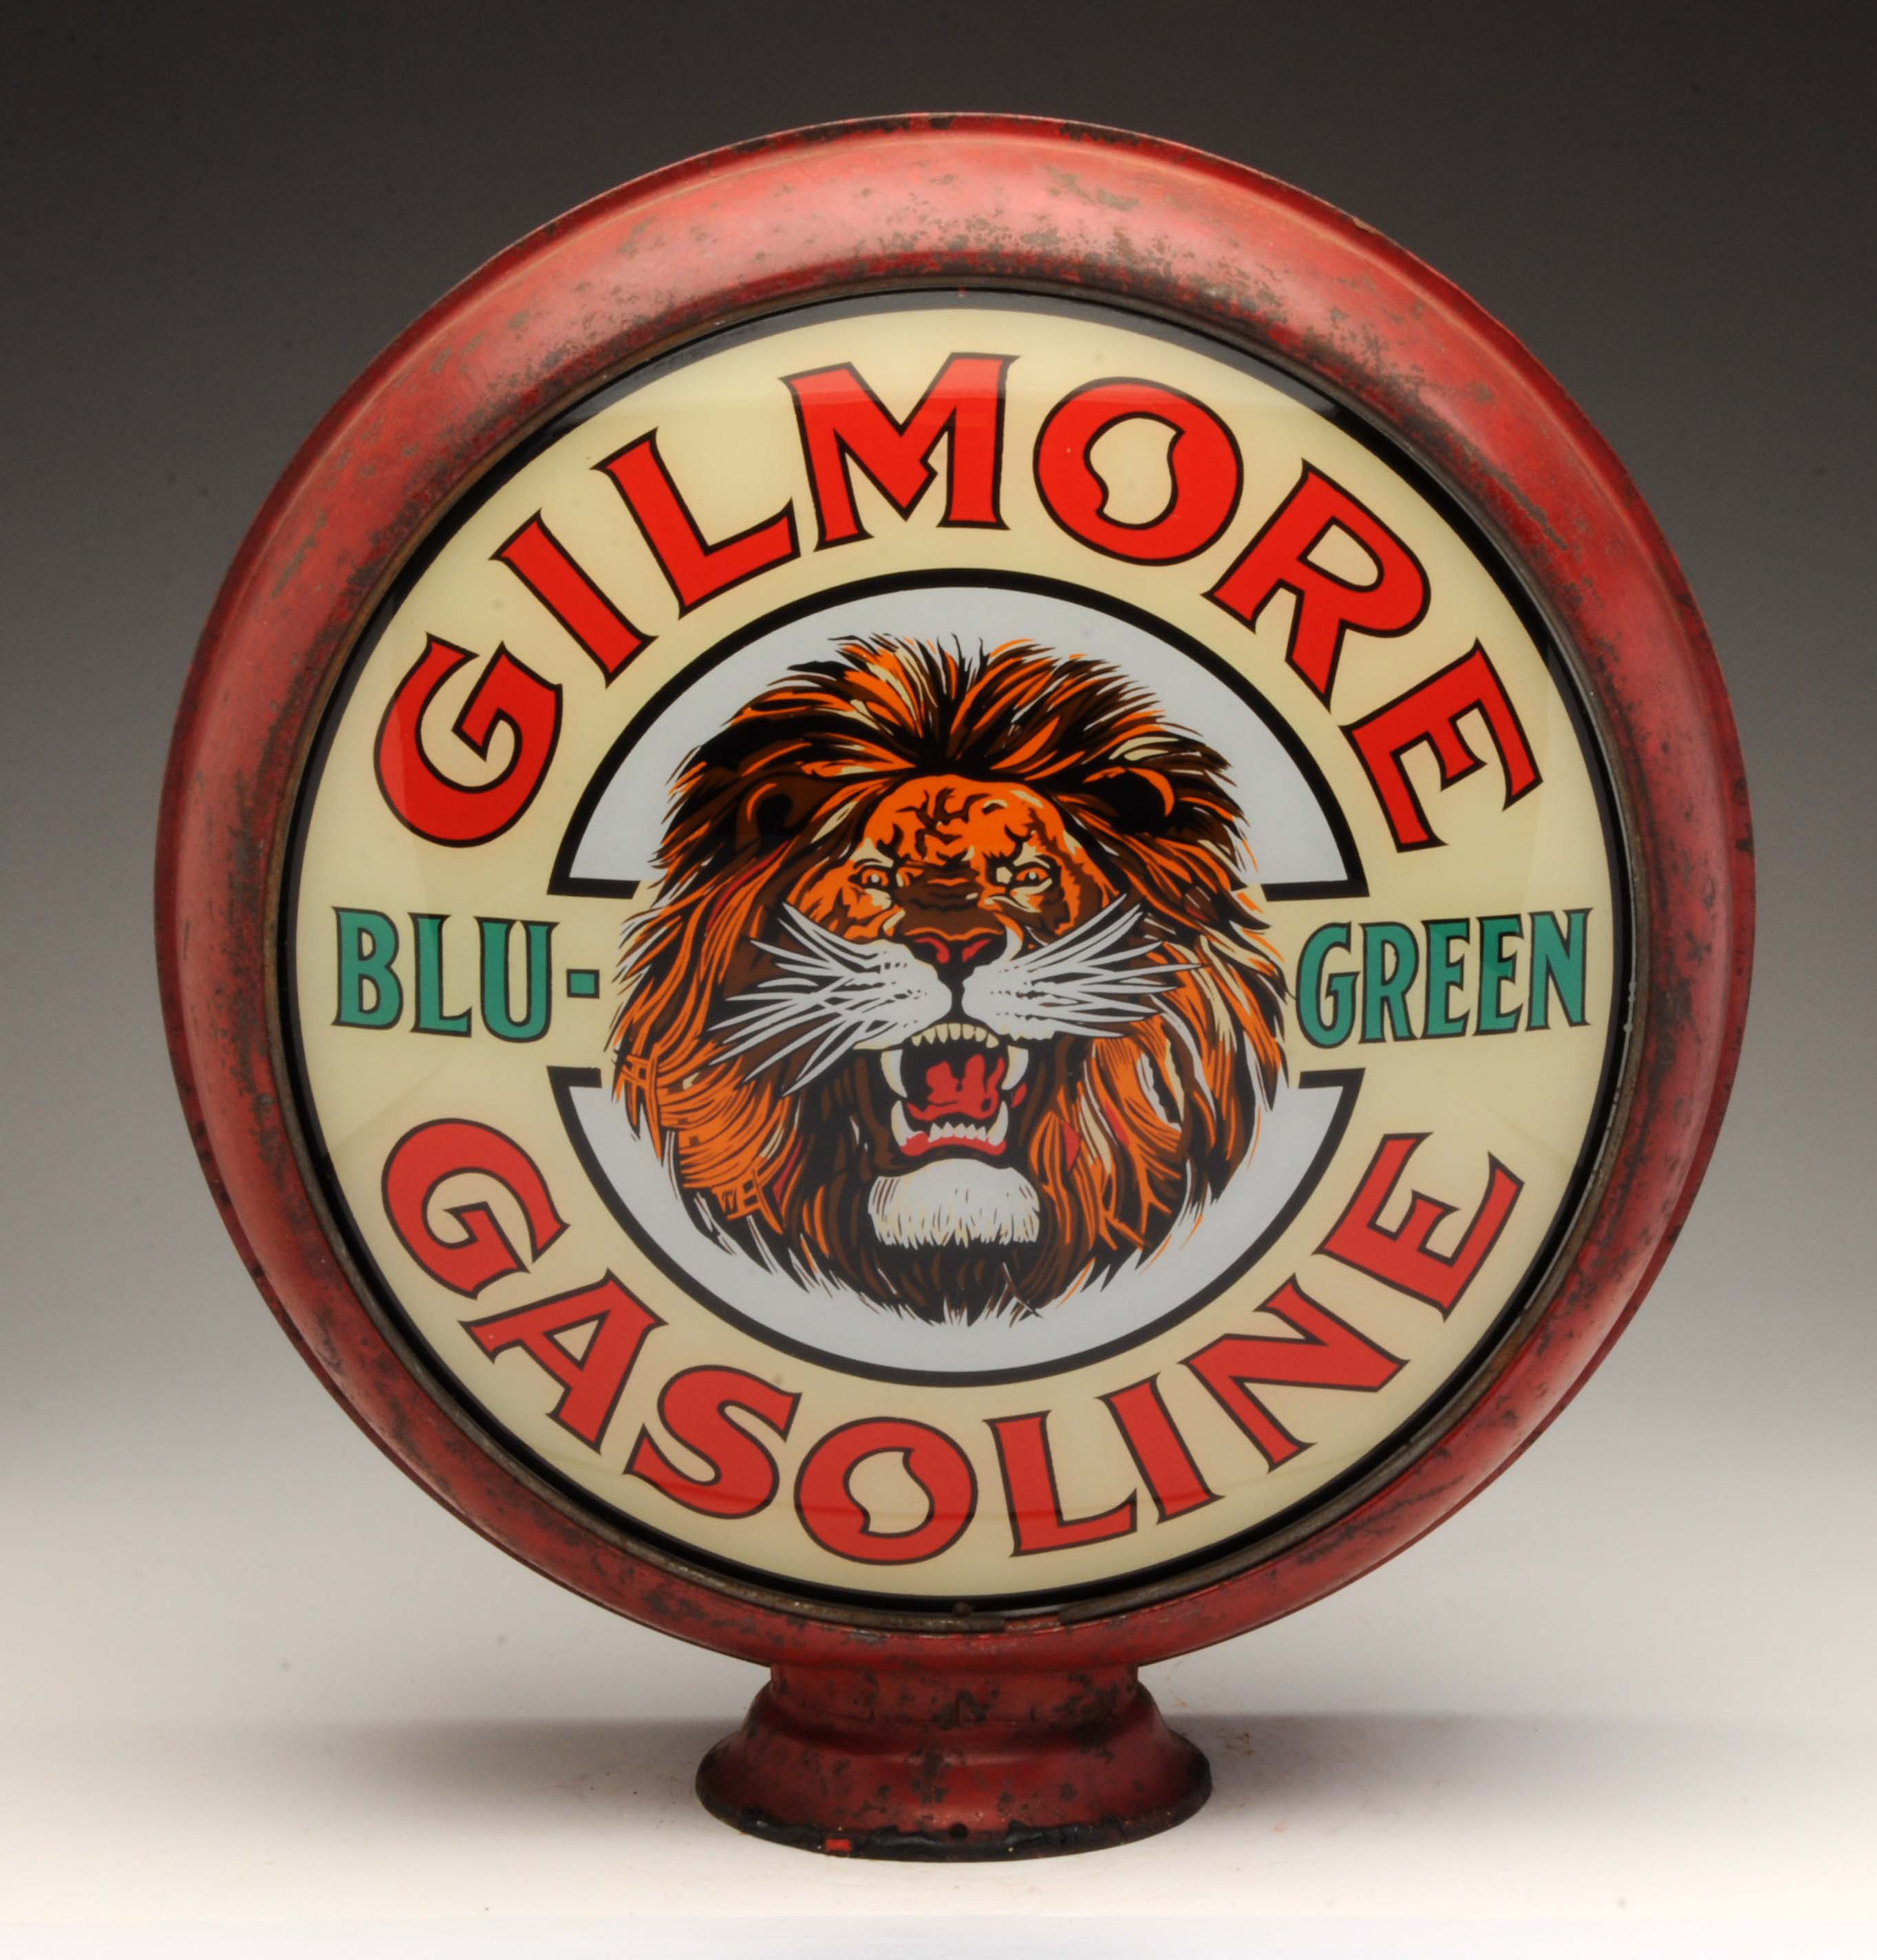 Lot #193	Gilmore Blu-Green Gasoline Single Globe Lens, estimated at $8,000-$12,000.